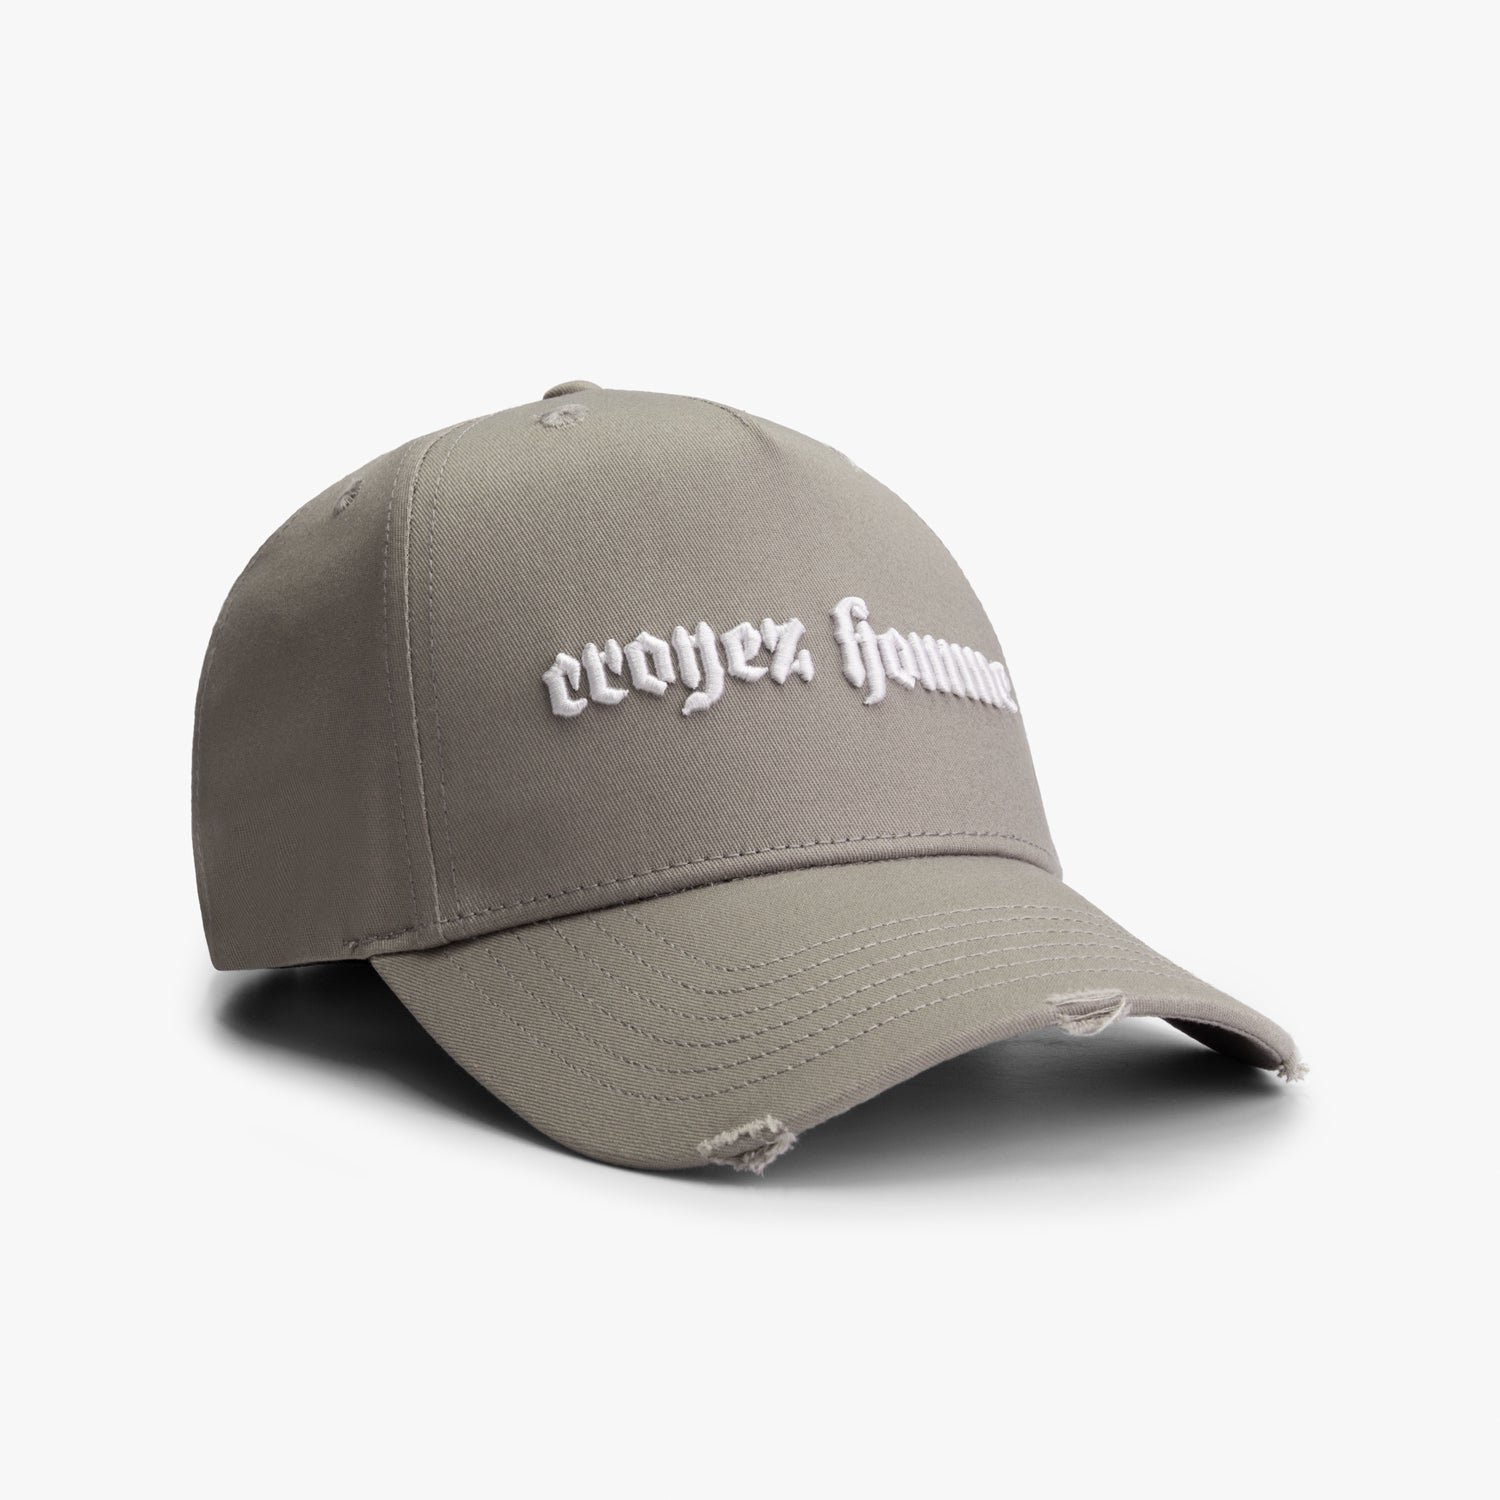 CROYEZ VICE CAP - VINTAGE GREY